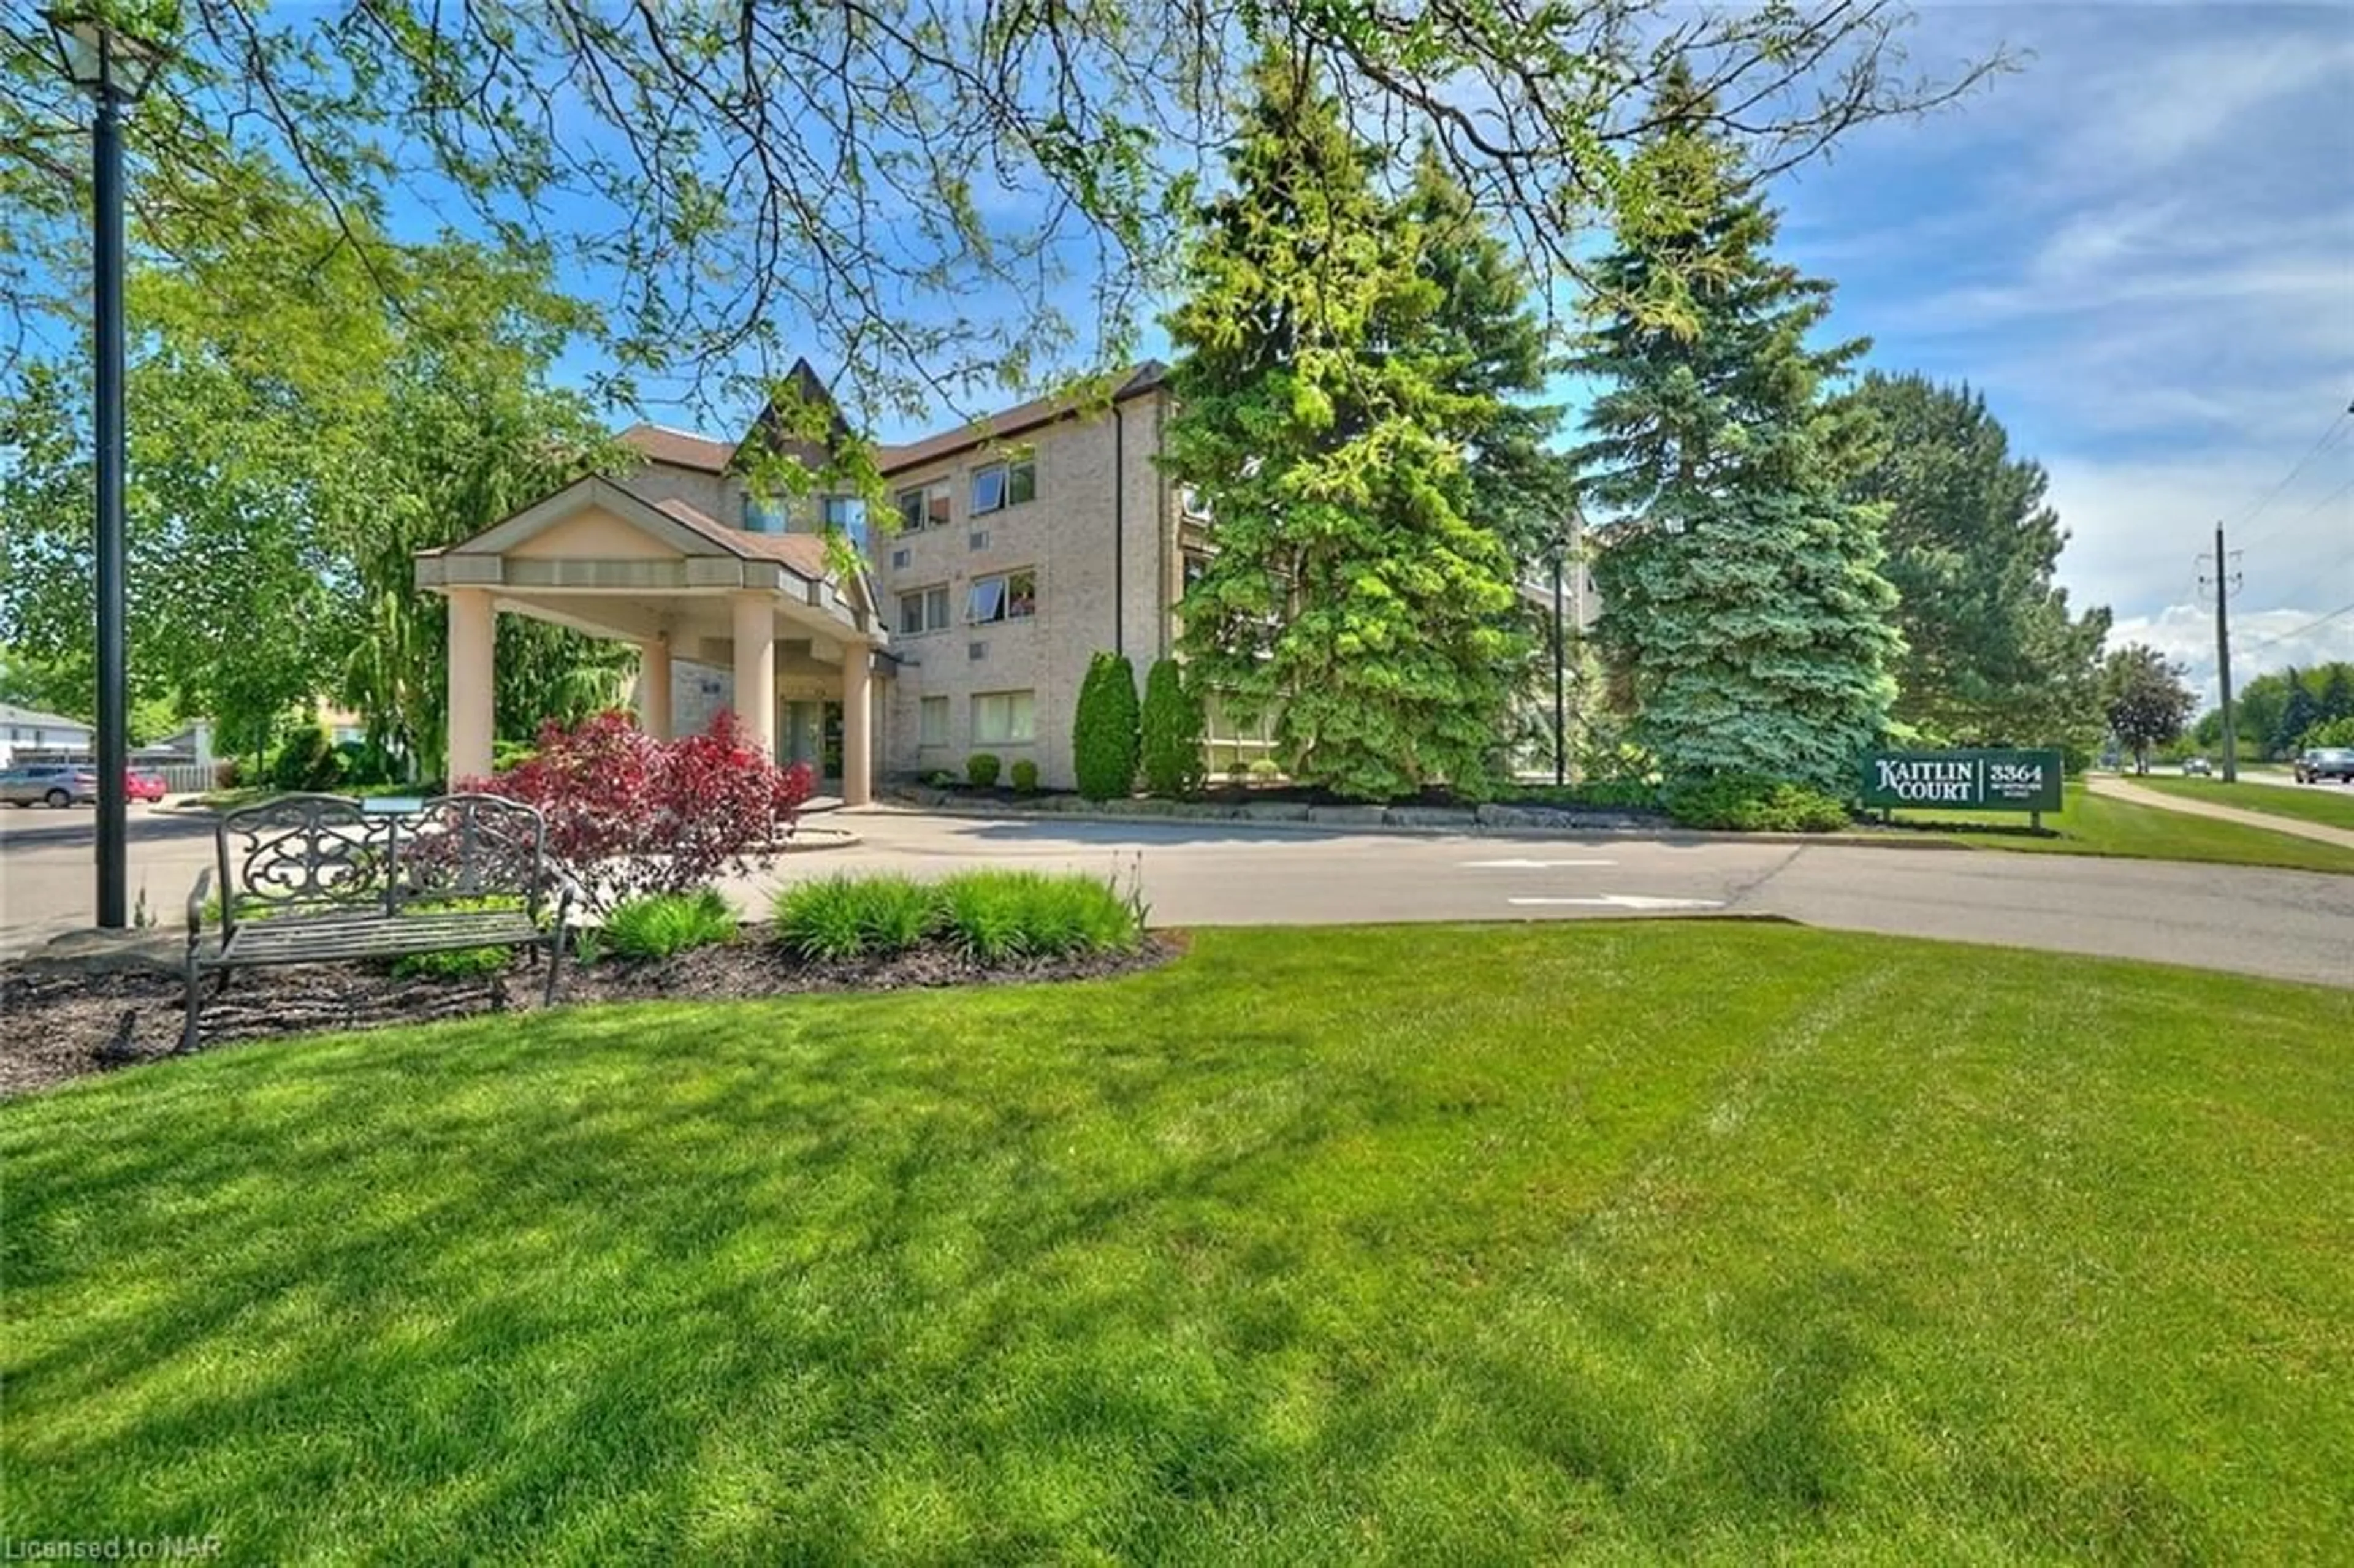 A pic from exterior of the house or condo for 3364 Montrose Rd #310, Niagara Falls Ontario L2E 6S4